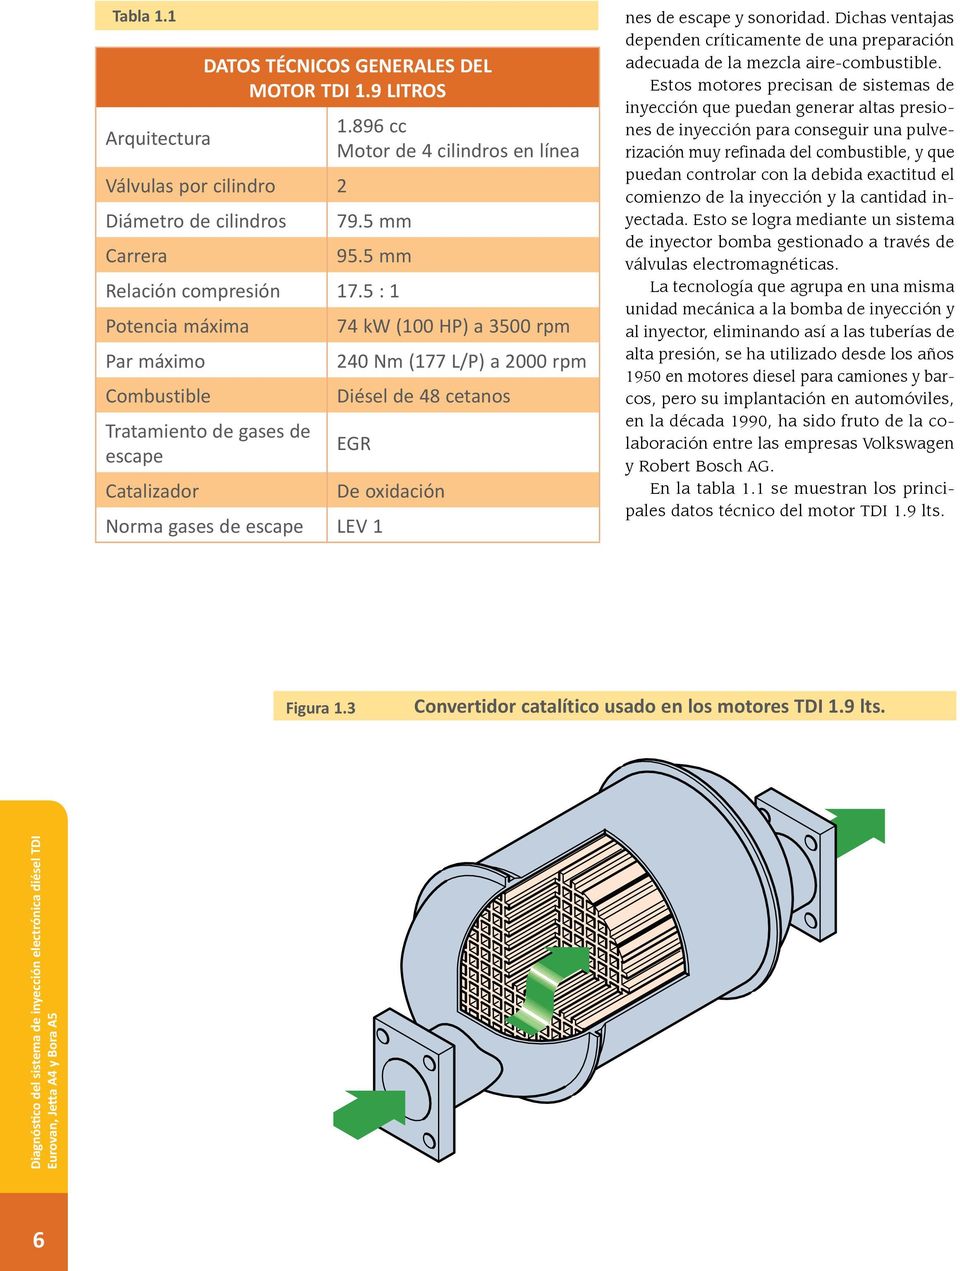 5 : 1 Potencia máxima Par máximo Combustible Tratamiento de gases de escape Catalizador 74 kw (100 HP) a 3500 rpm 240 Nm (177 L/P) a 2000 rpm Diésel de 48 cetanos EGR Norma gases de escape LEV 1 De